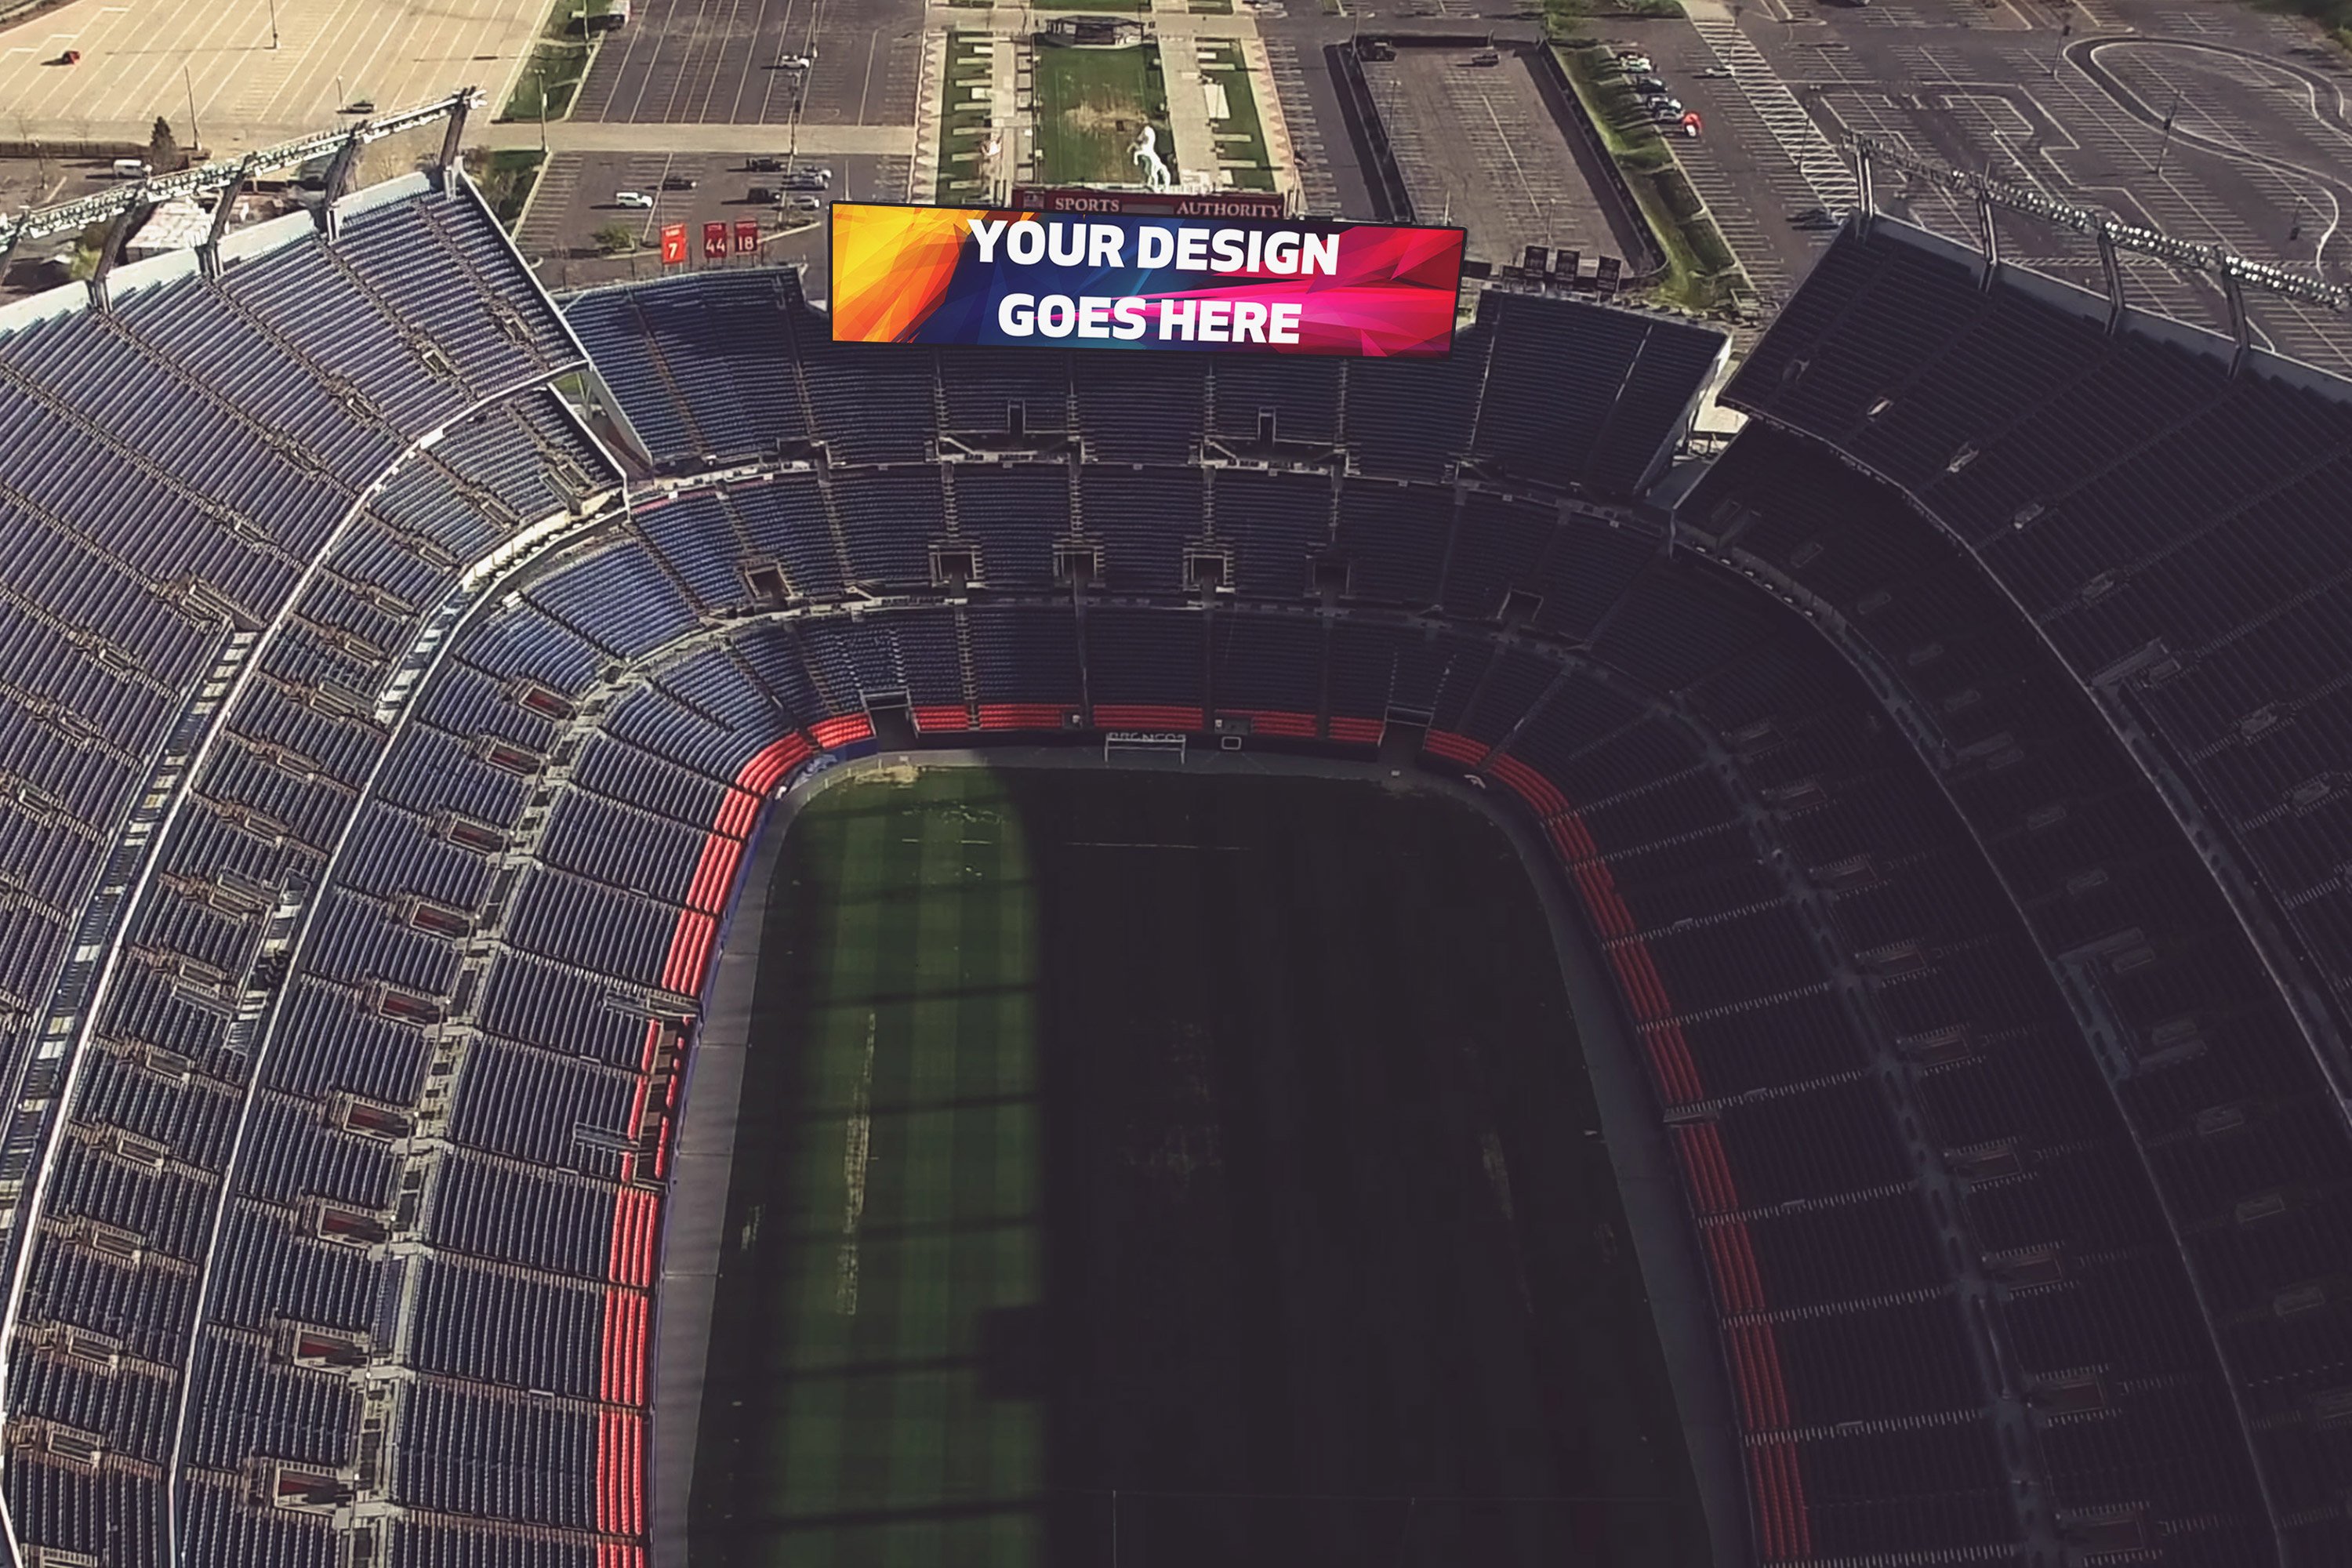 NFL Stadium Display #32 cover image.